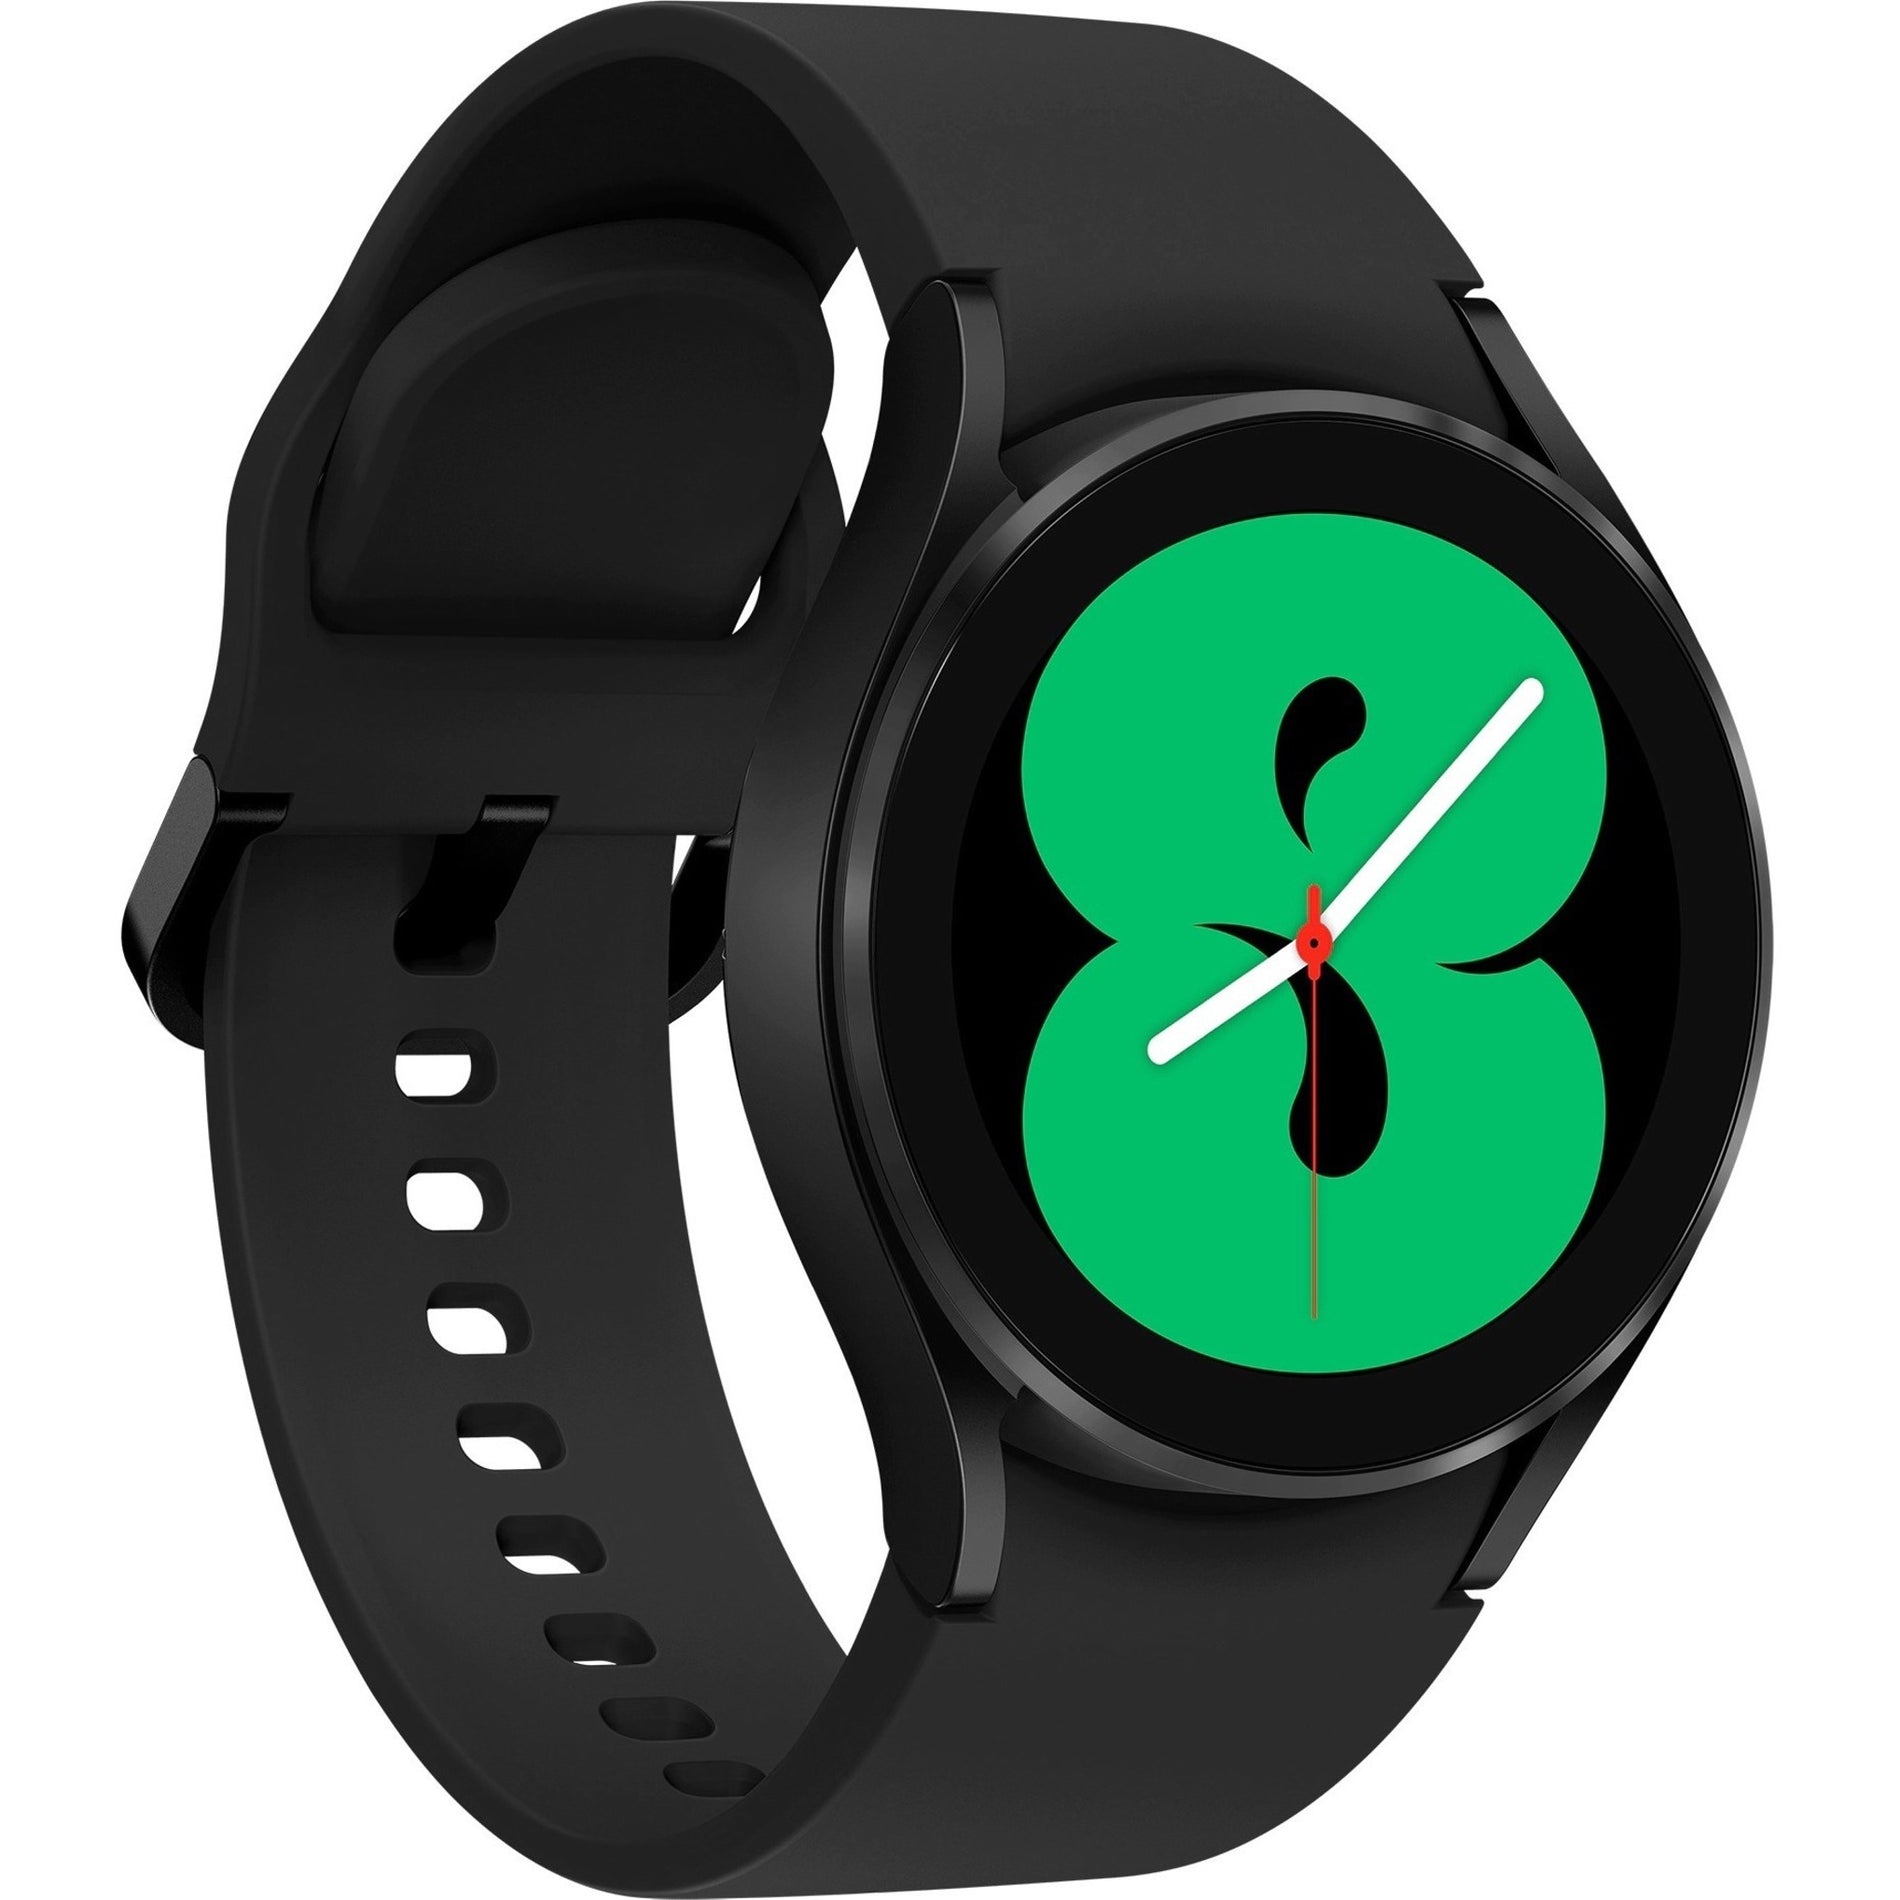 Samsung Galaxy Watch4, 40mm, Black, LTE - Health & Fitness Smart Watch [Discontinued]